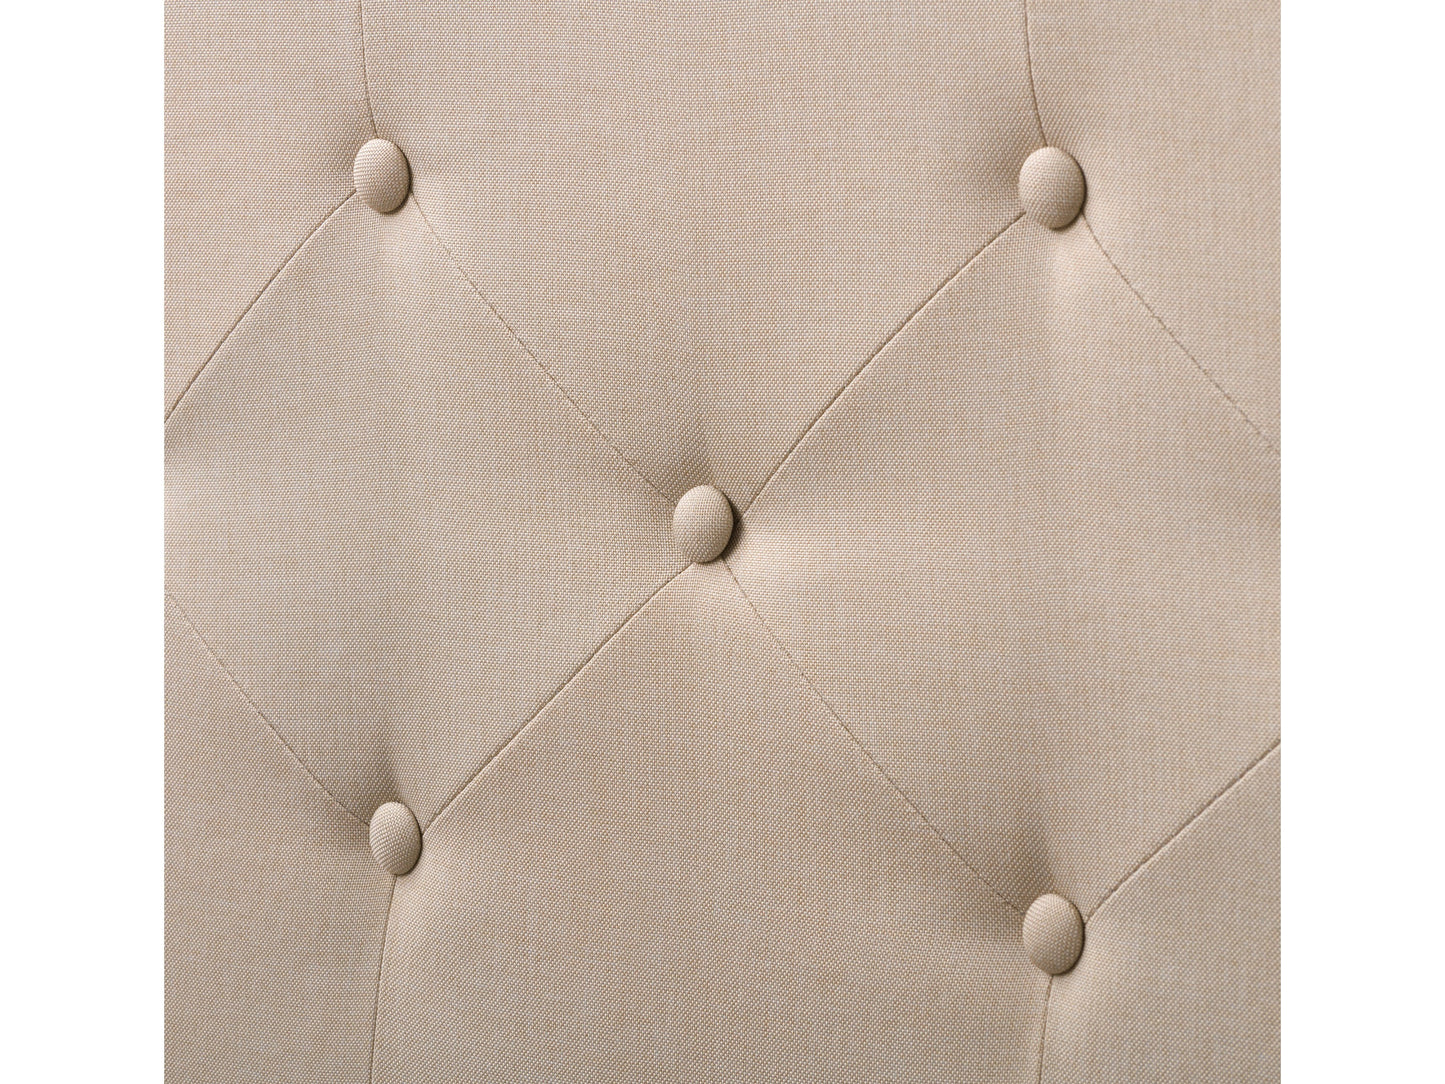 cream Button Tufted Twin / Single Bed Nova Ridge Collection detail image by CorLiving#color_nova-ridge-cream